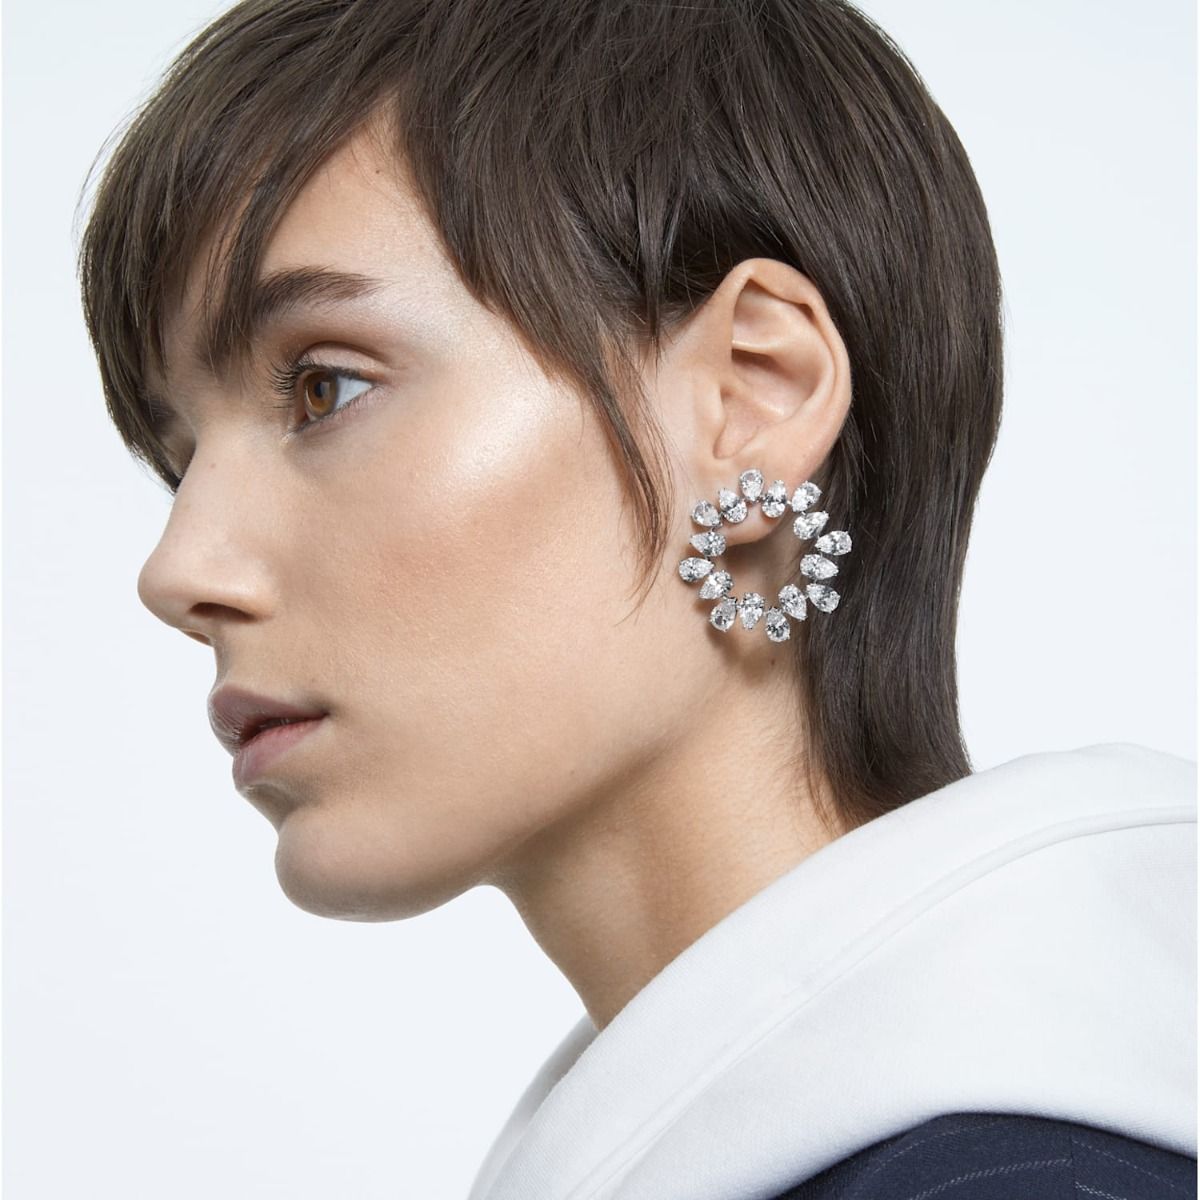 Buy Swarovski Millenia Earrings Pear Cut - White with Rhodium Plating